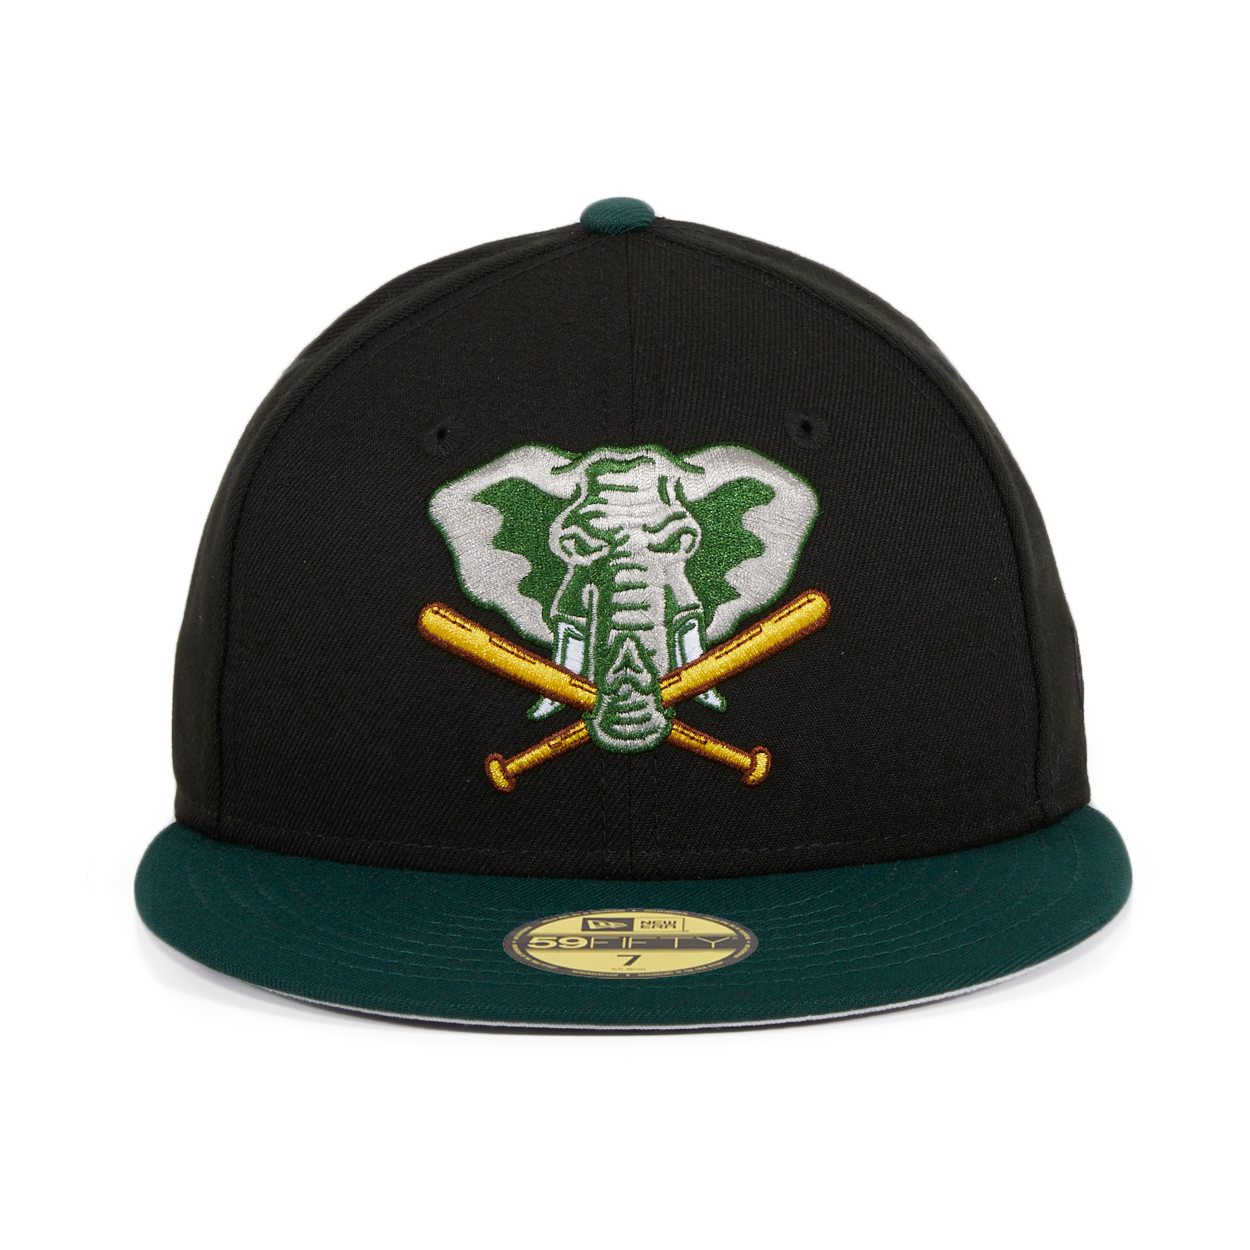 New Era 59FIFTY Oakland Athletics 1993 Alternate Hat - Black, Green Black/Green / 7 3/8